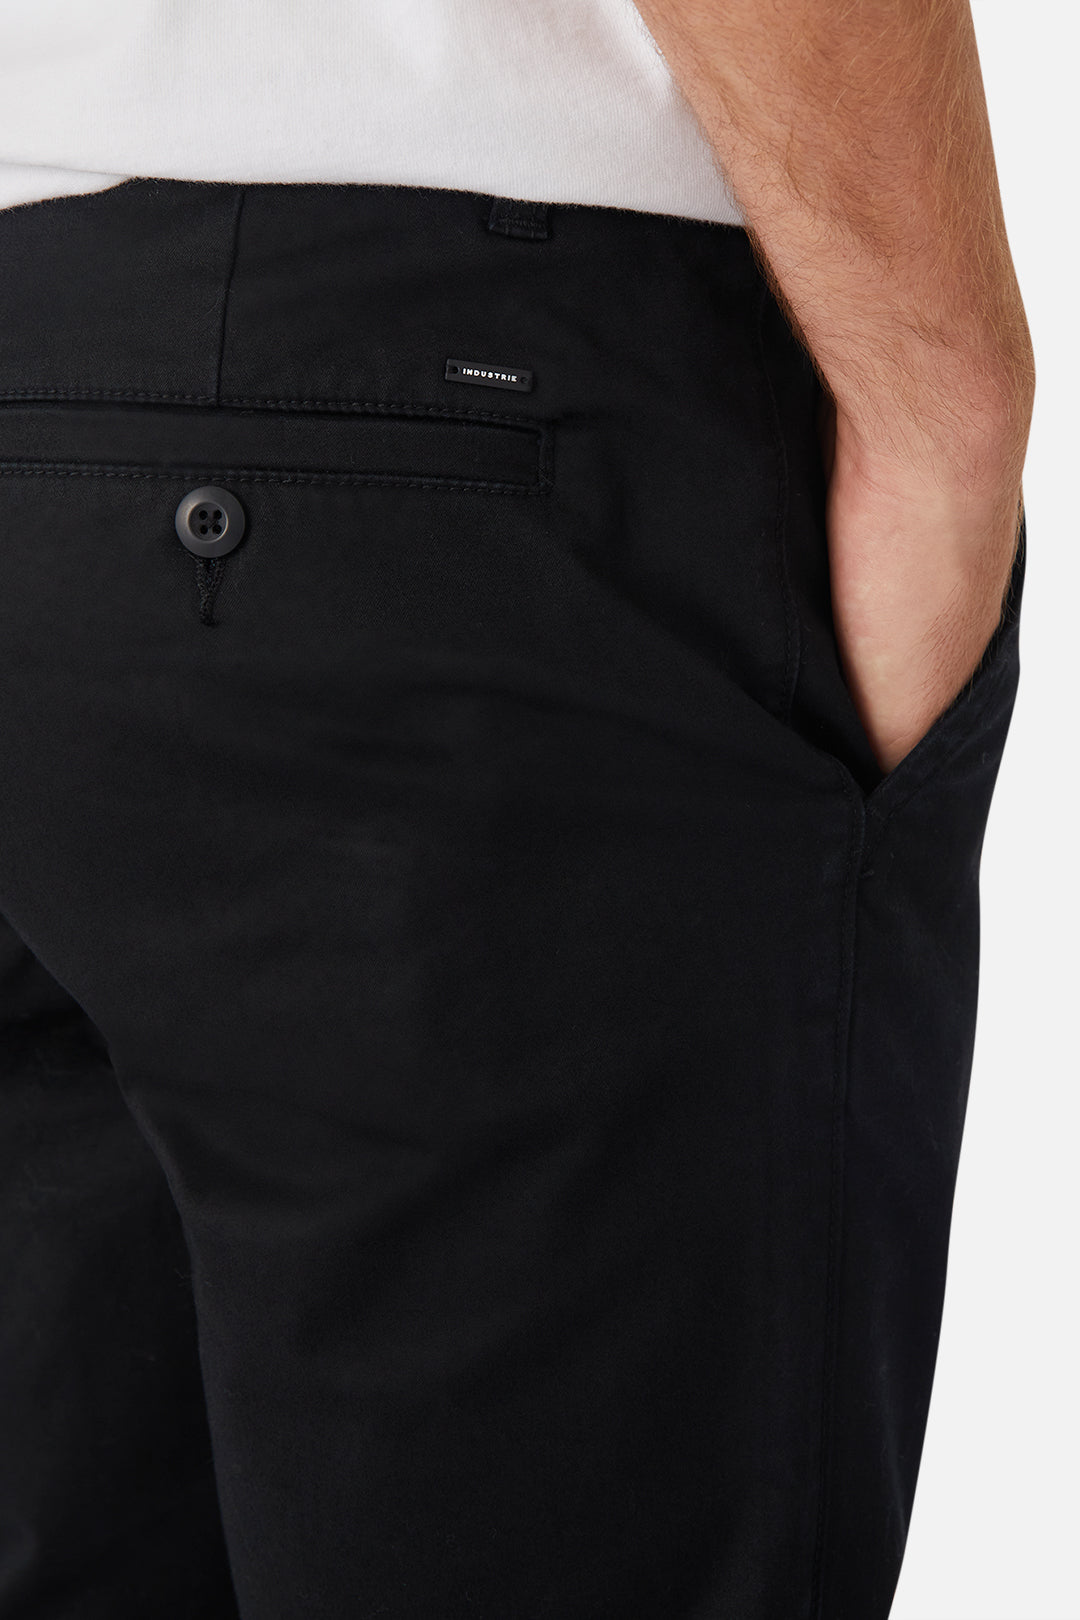 Buy men in class Black Chinos Pants for Men Chinos for Men Slim fit Chinos  Trousers for Mens Checked Chinos at Amazonin